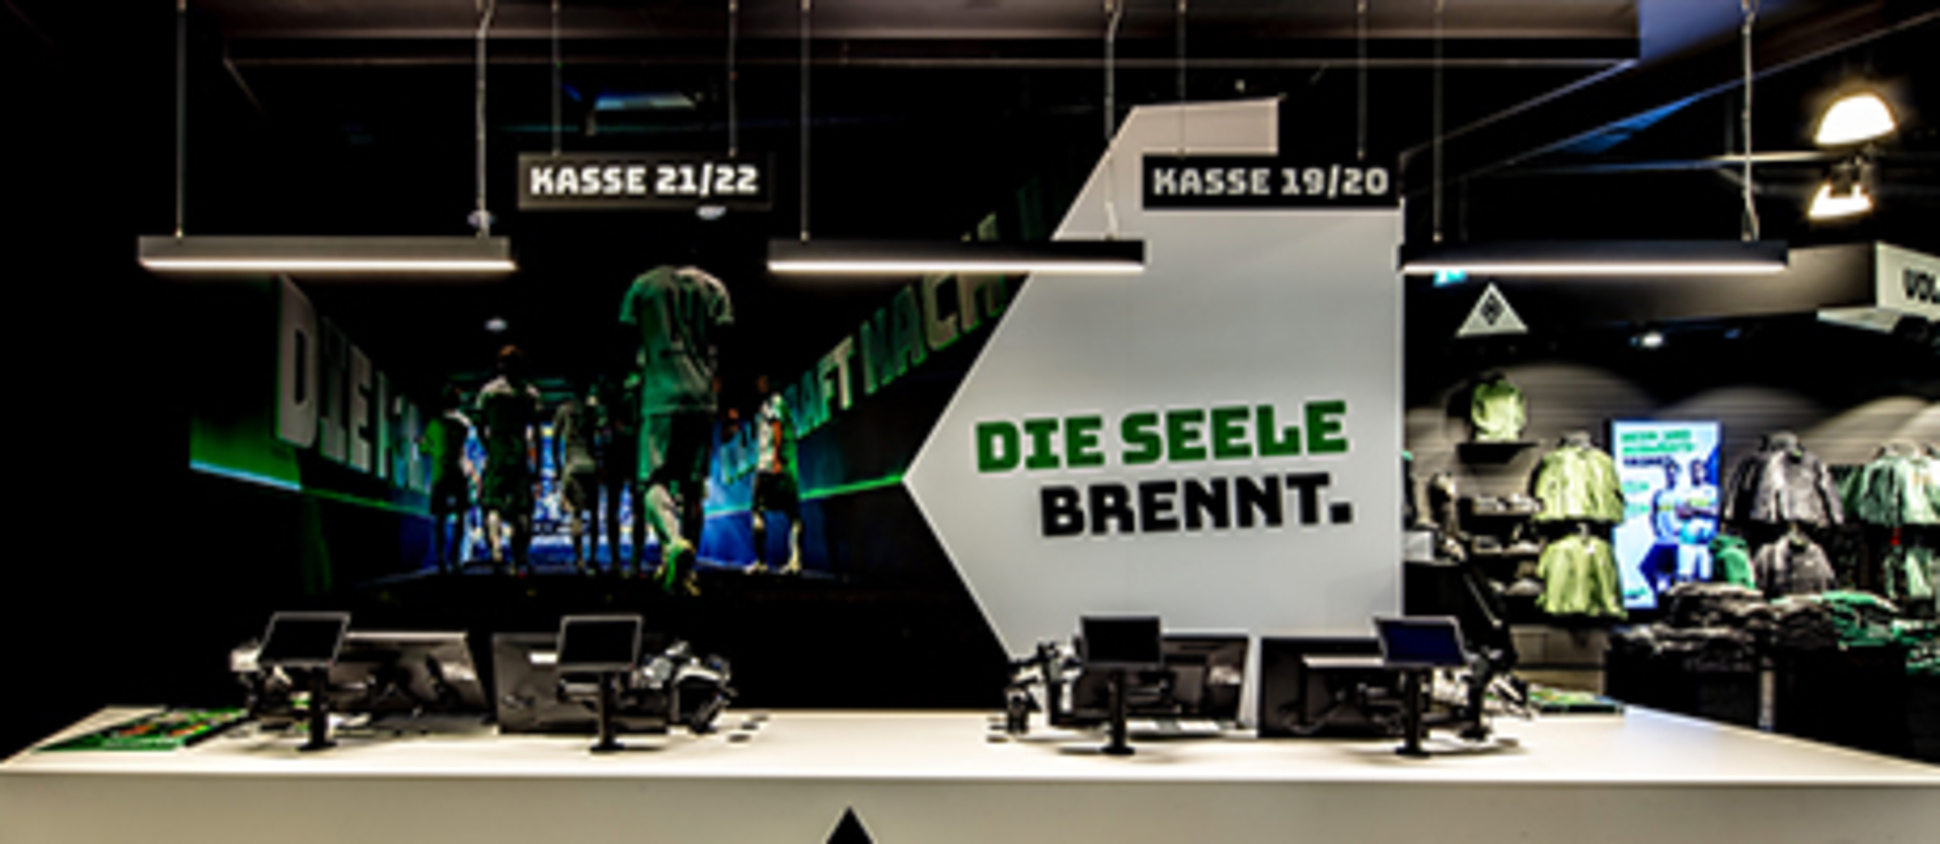 Shop / Retail bei ALL IN ONE Elektro & IT Technologie GmbH in Frankfurt am Main